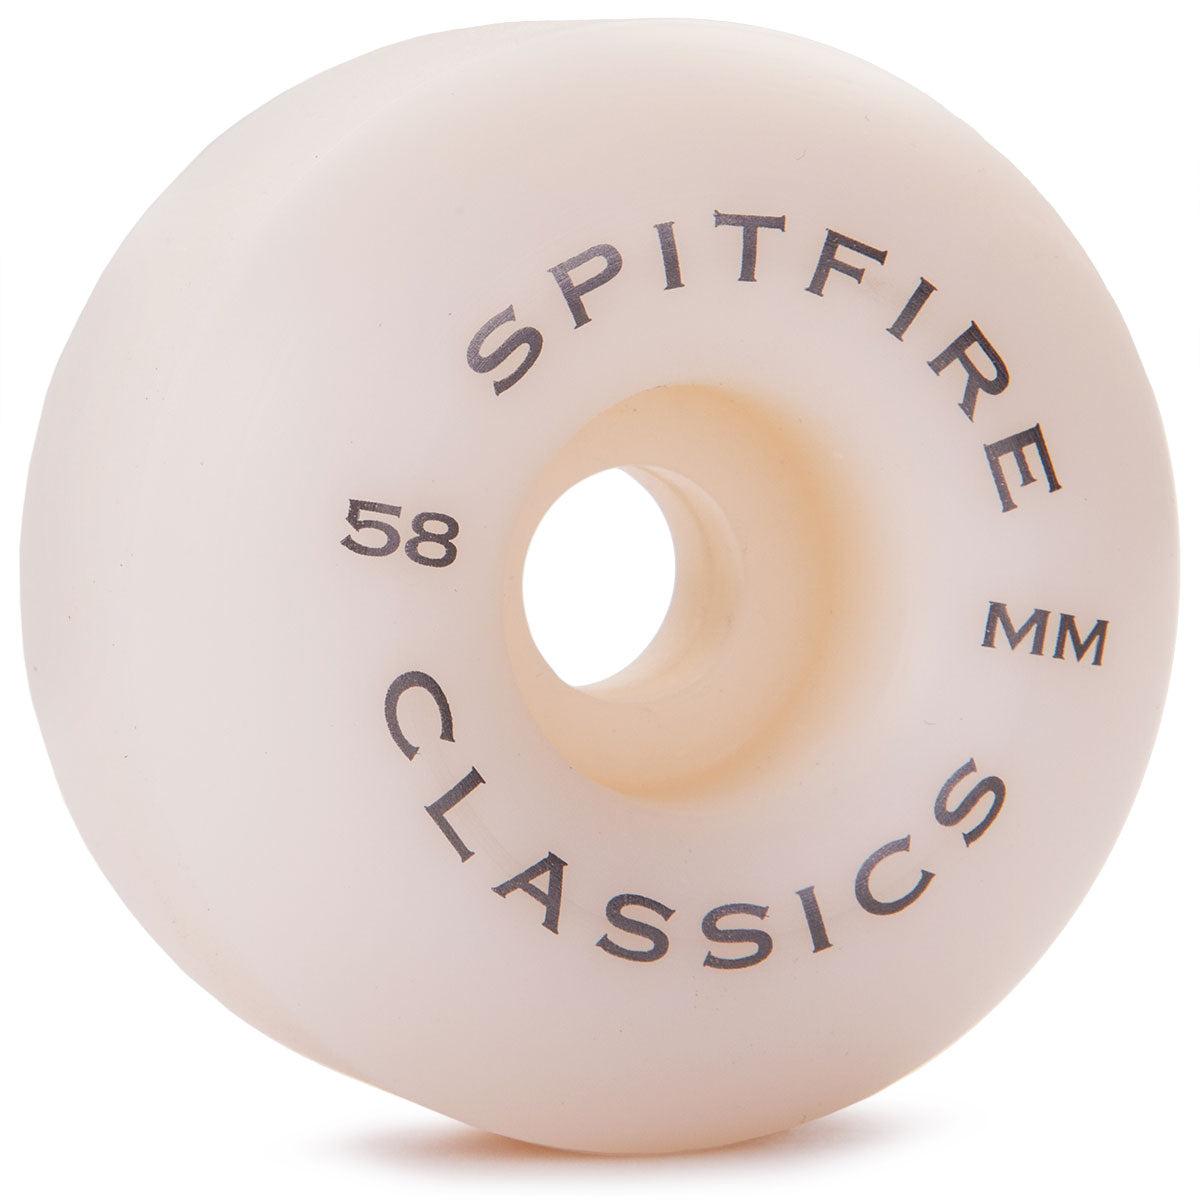 Spitfire Classics Skateboard Wheels - 58mm image 2